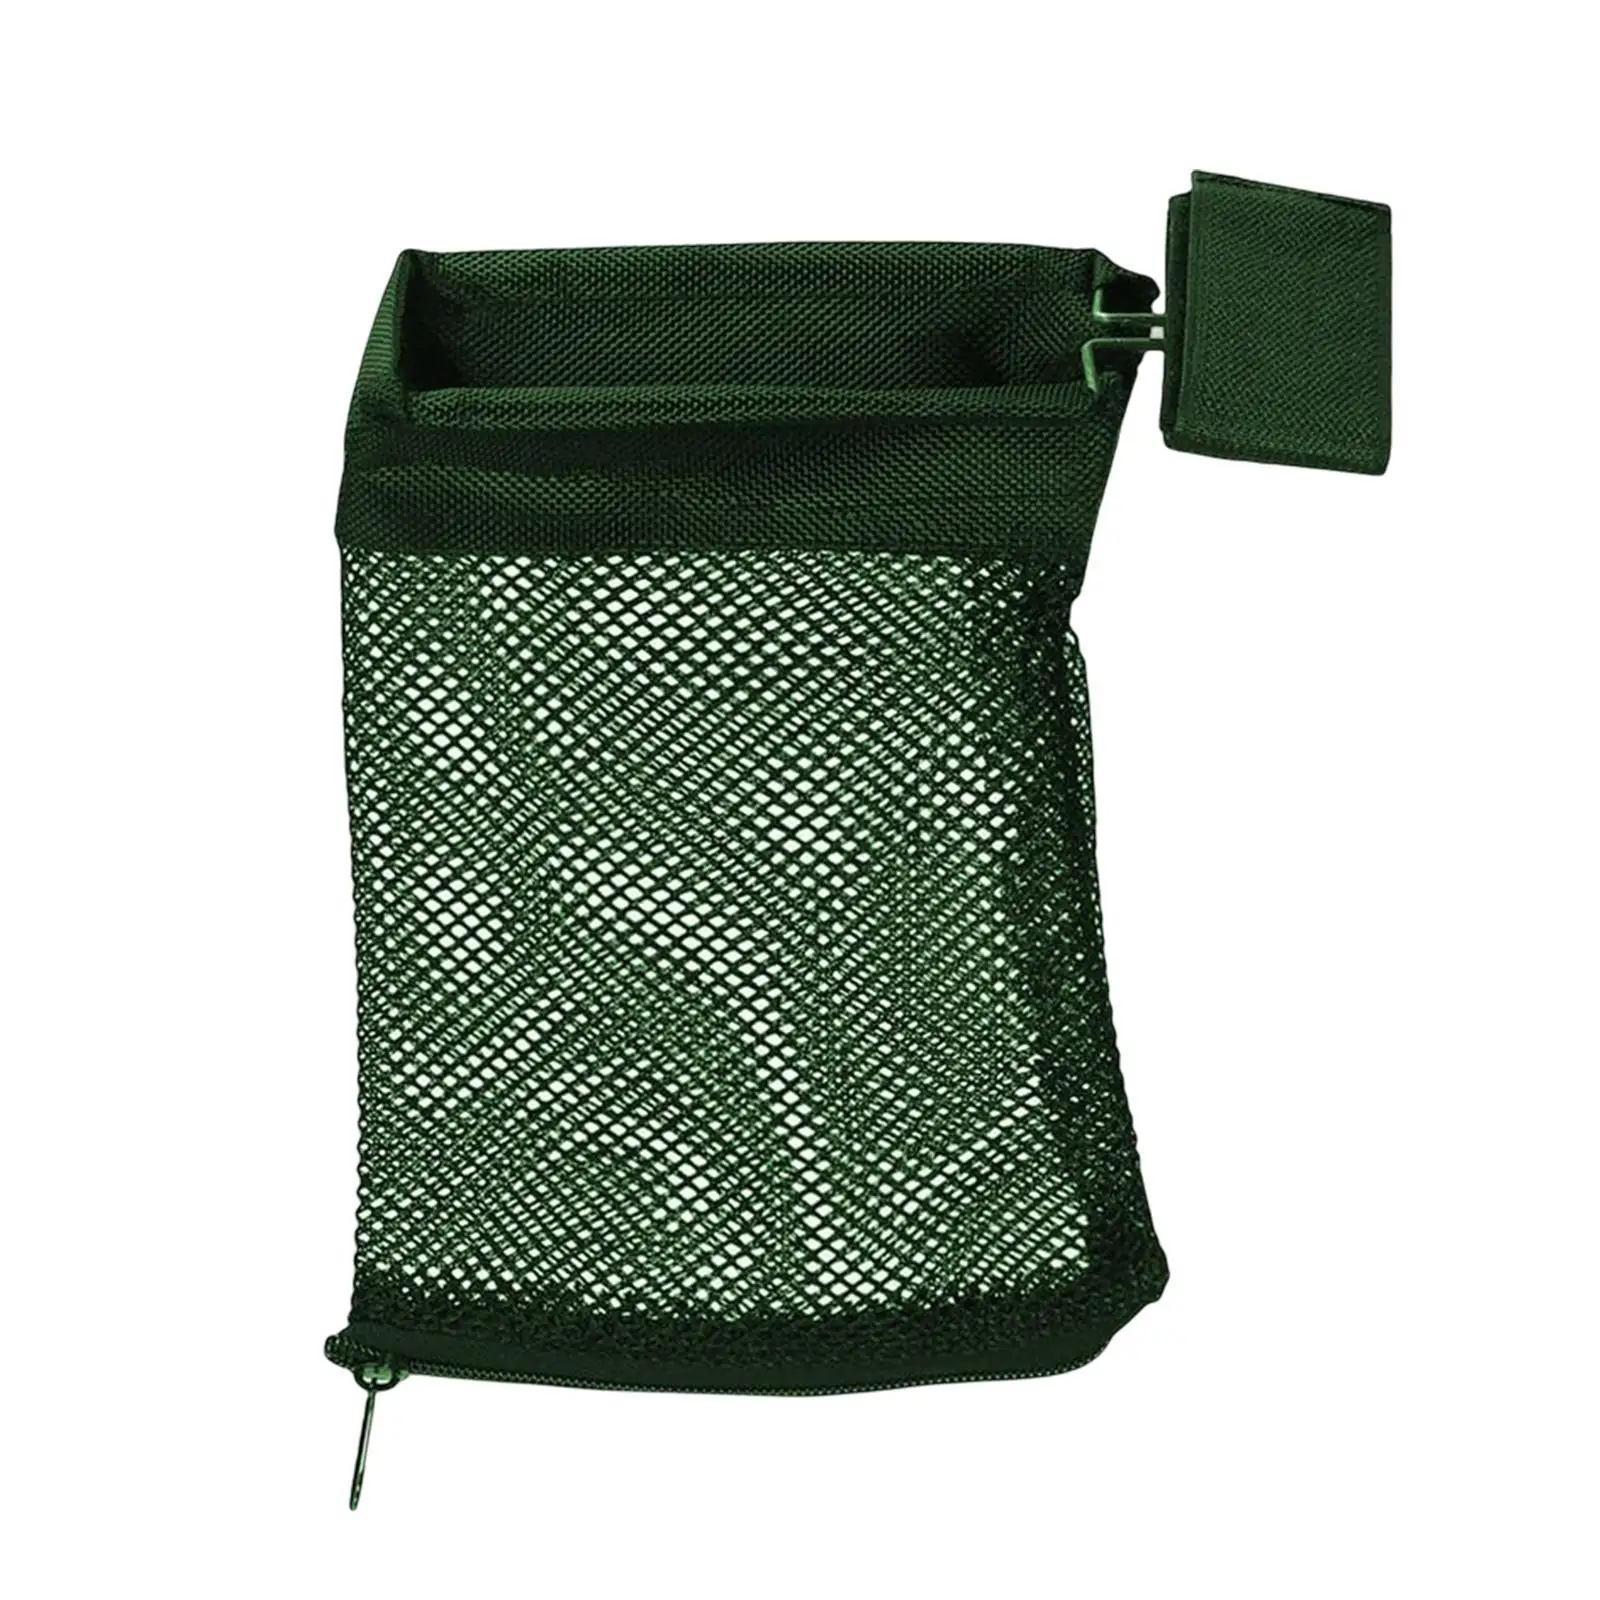 Recycled Bag Holder Lightweight Organizer Storage Bag for Camp Travel